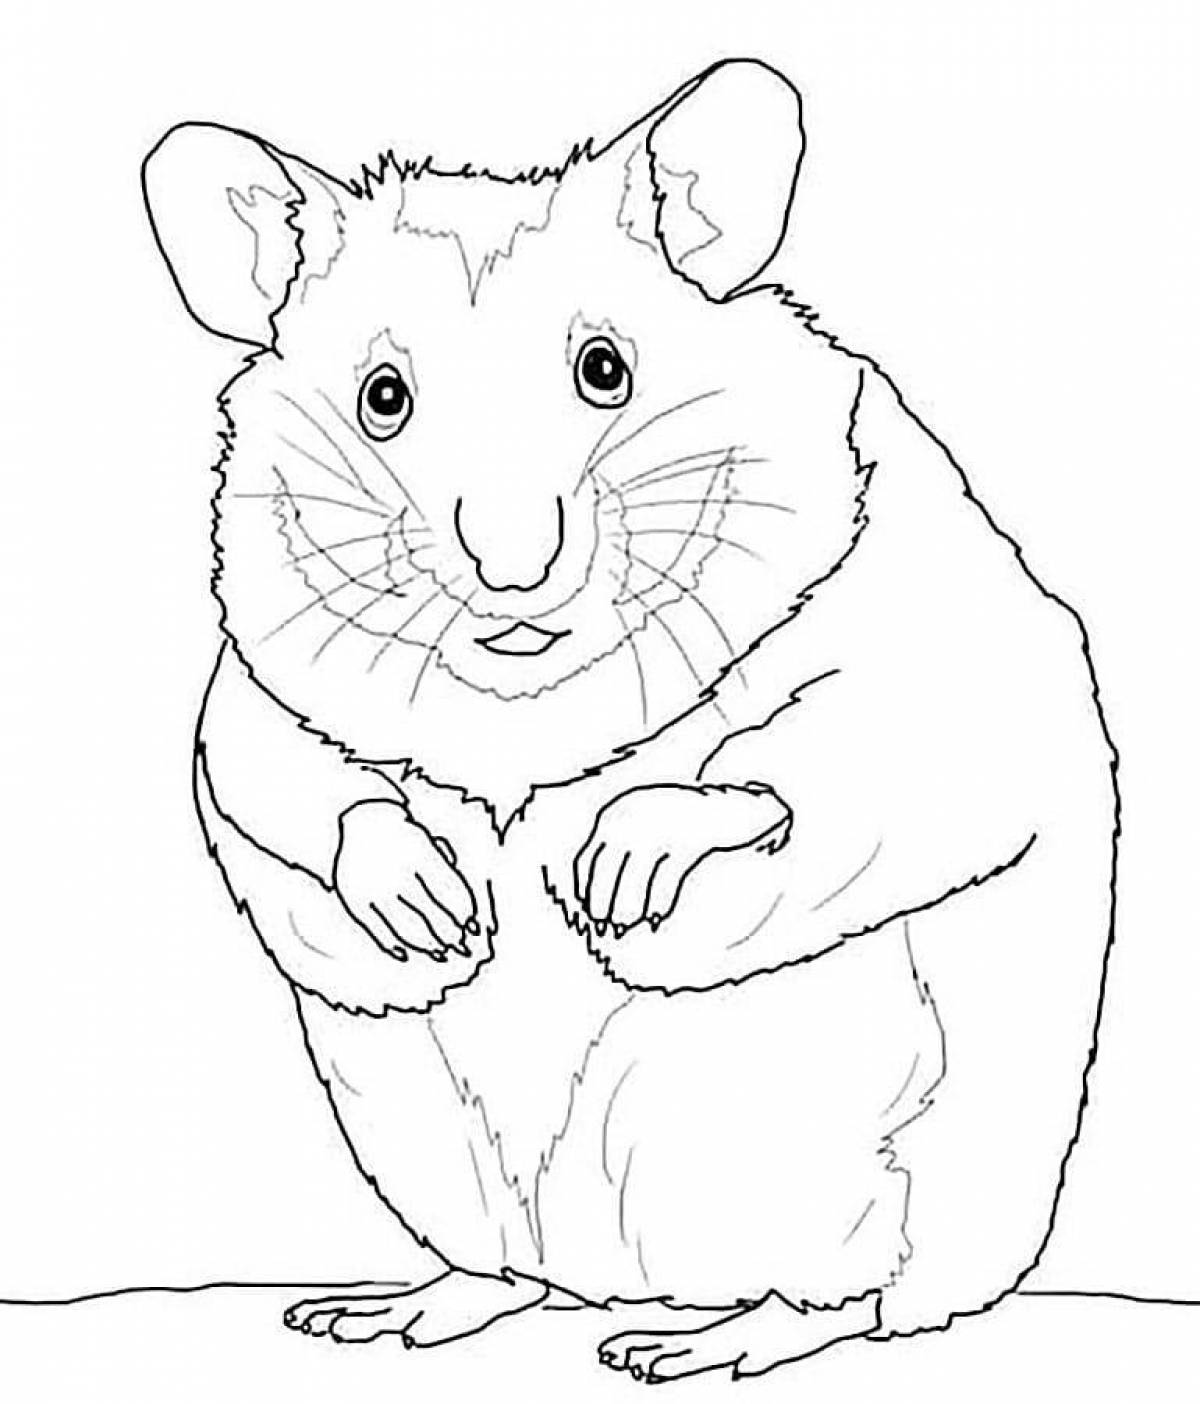 Impressive hamster coloring book for kids